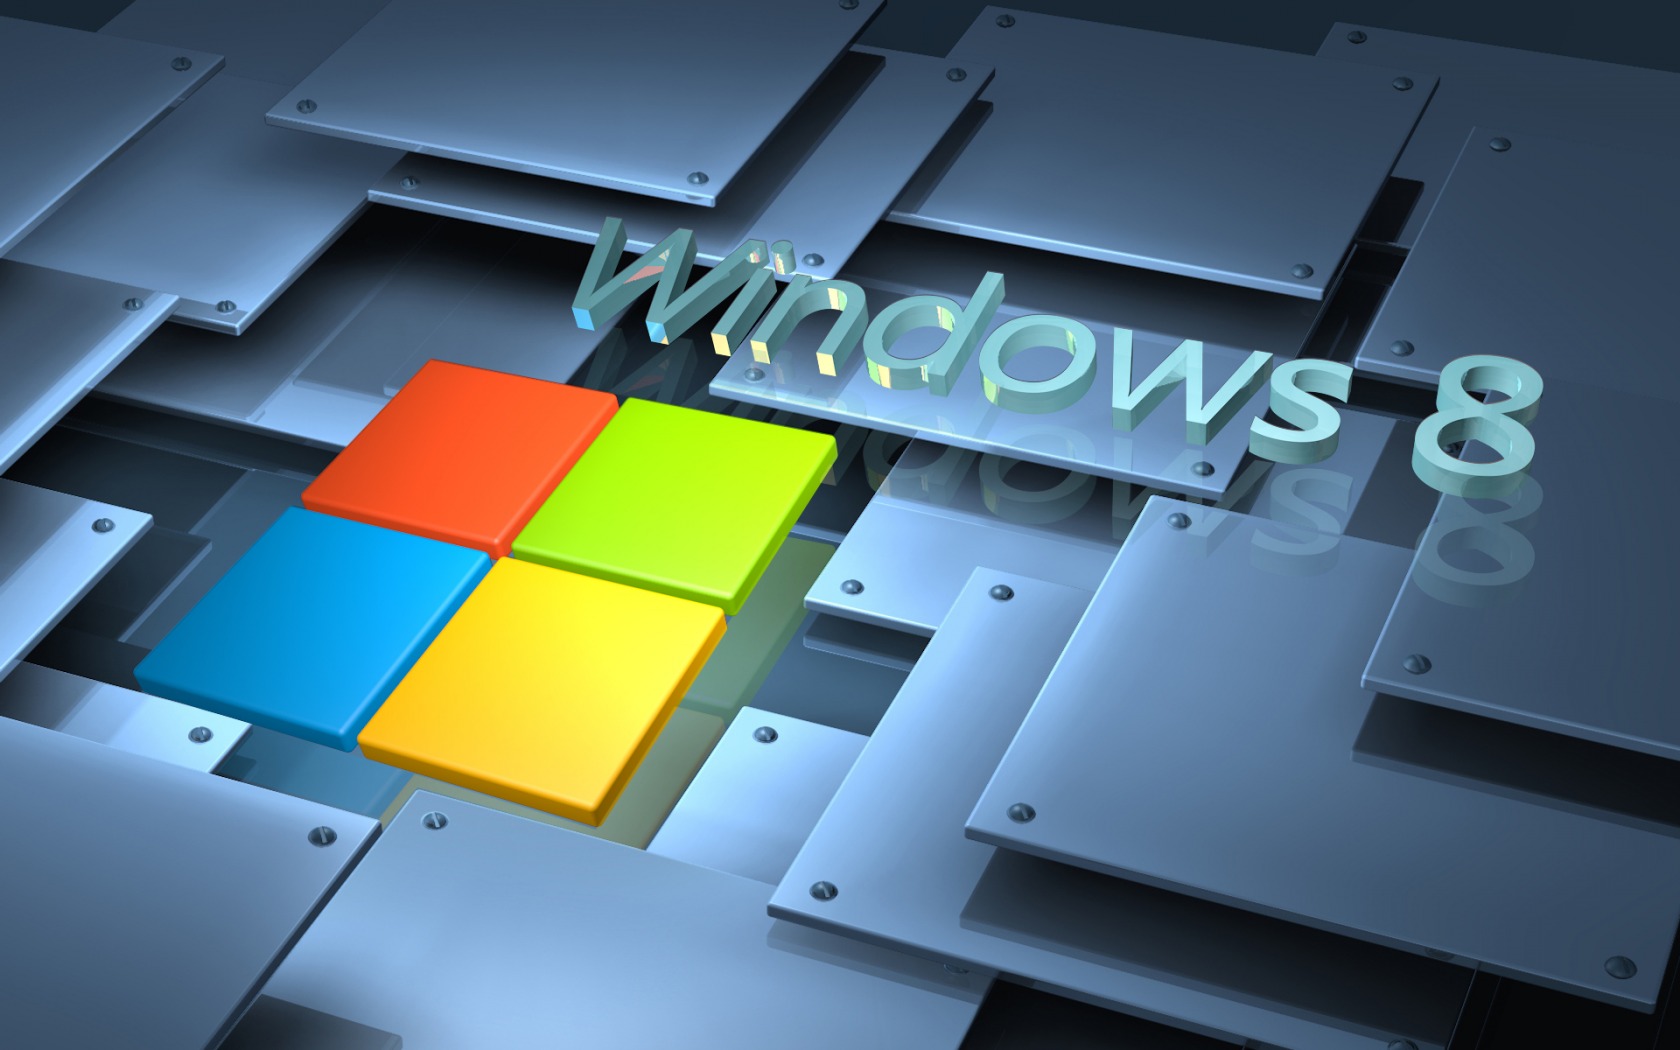 Amazing 3D Windows 8 Wallpaper Image Desktop Free Download